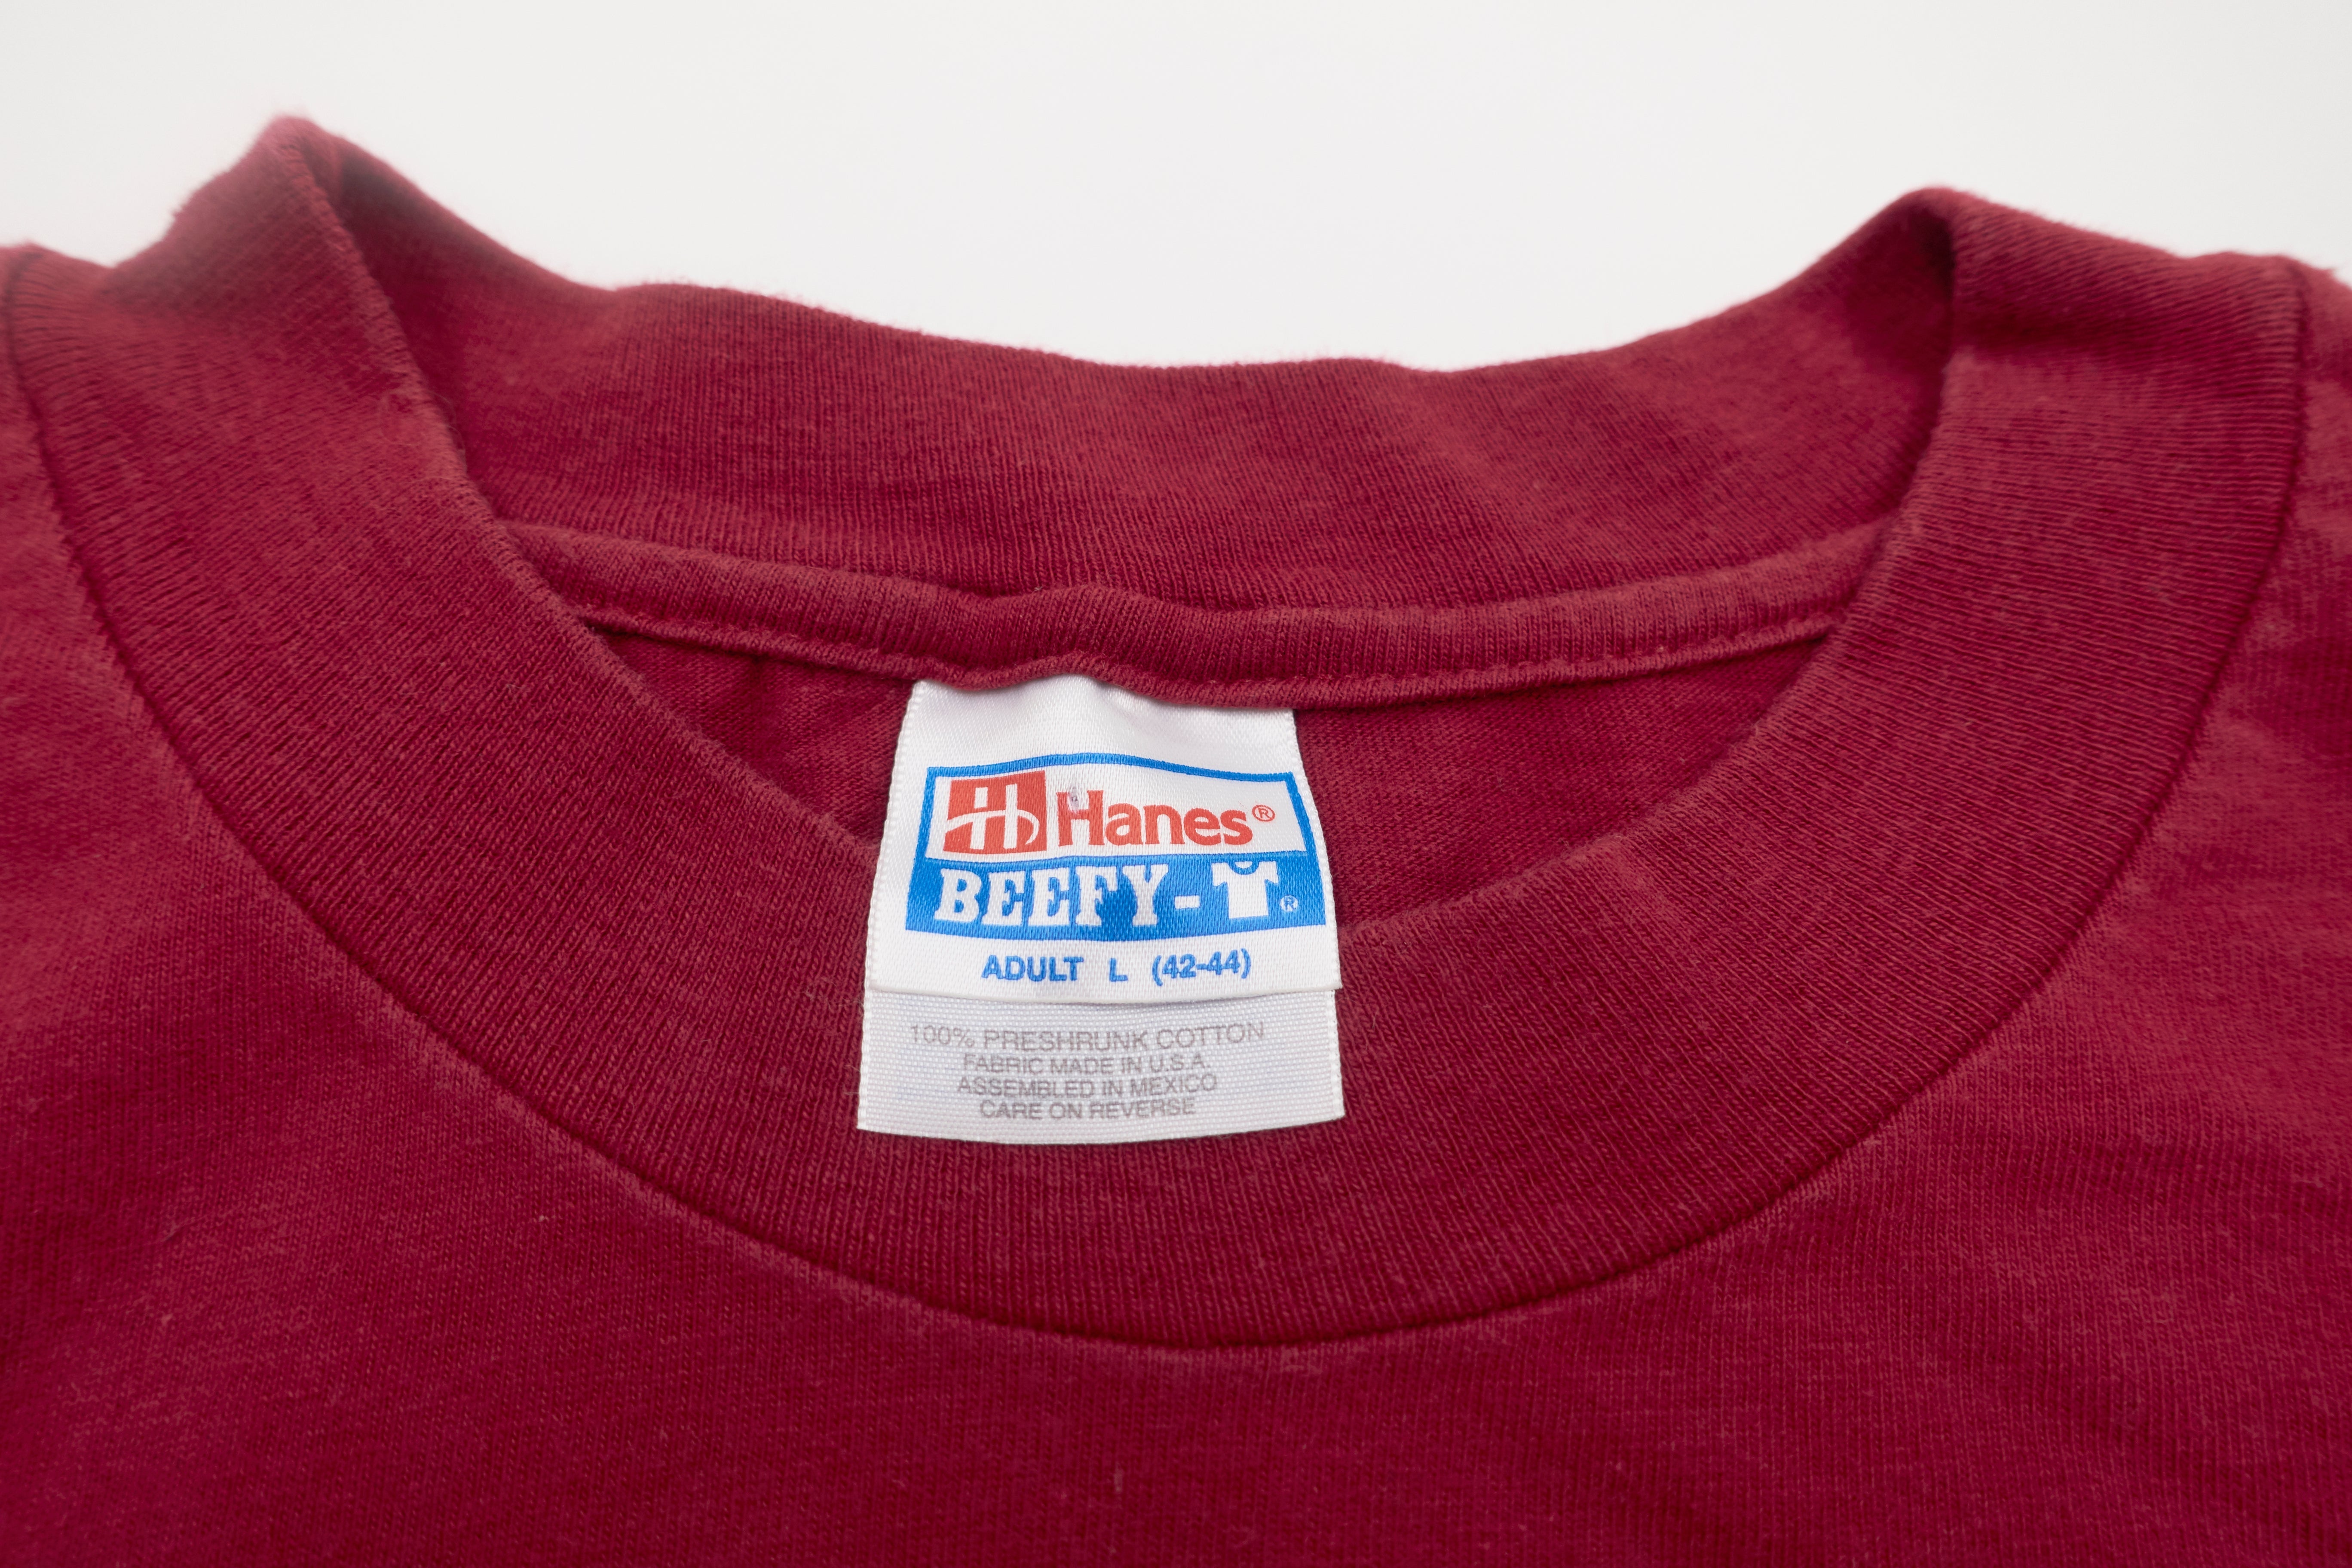 Poe – Hello 1997 Tour Shirt Size Large